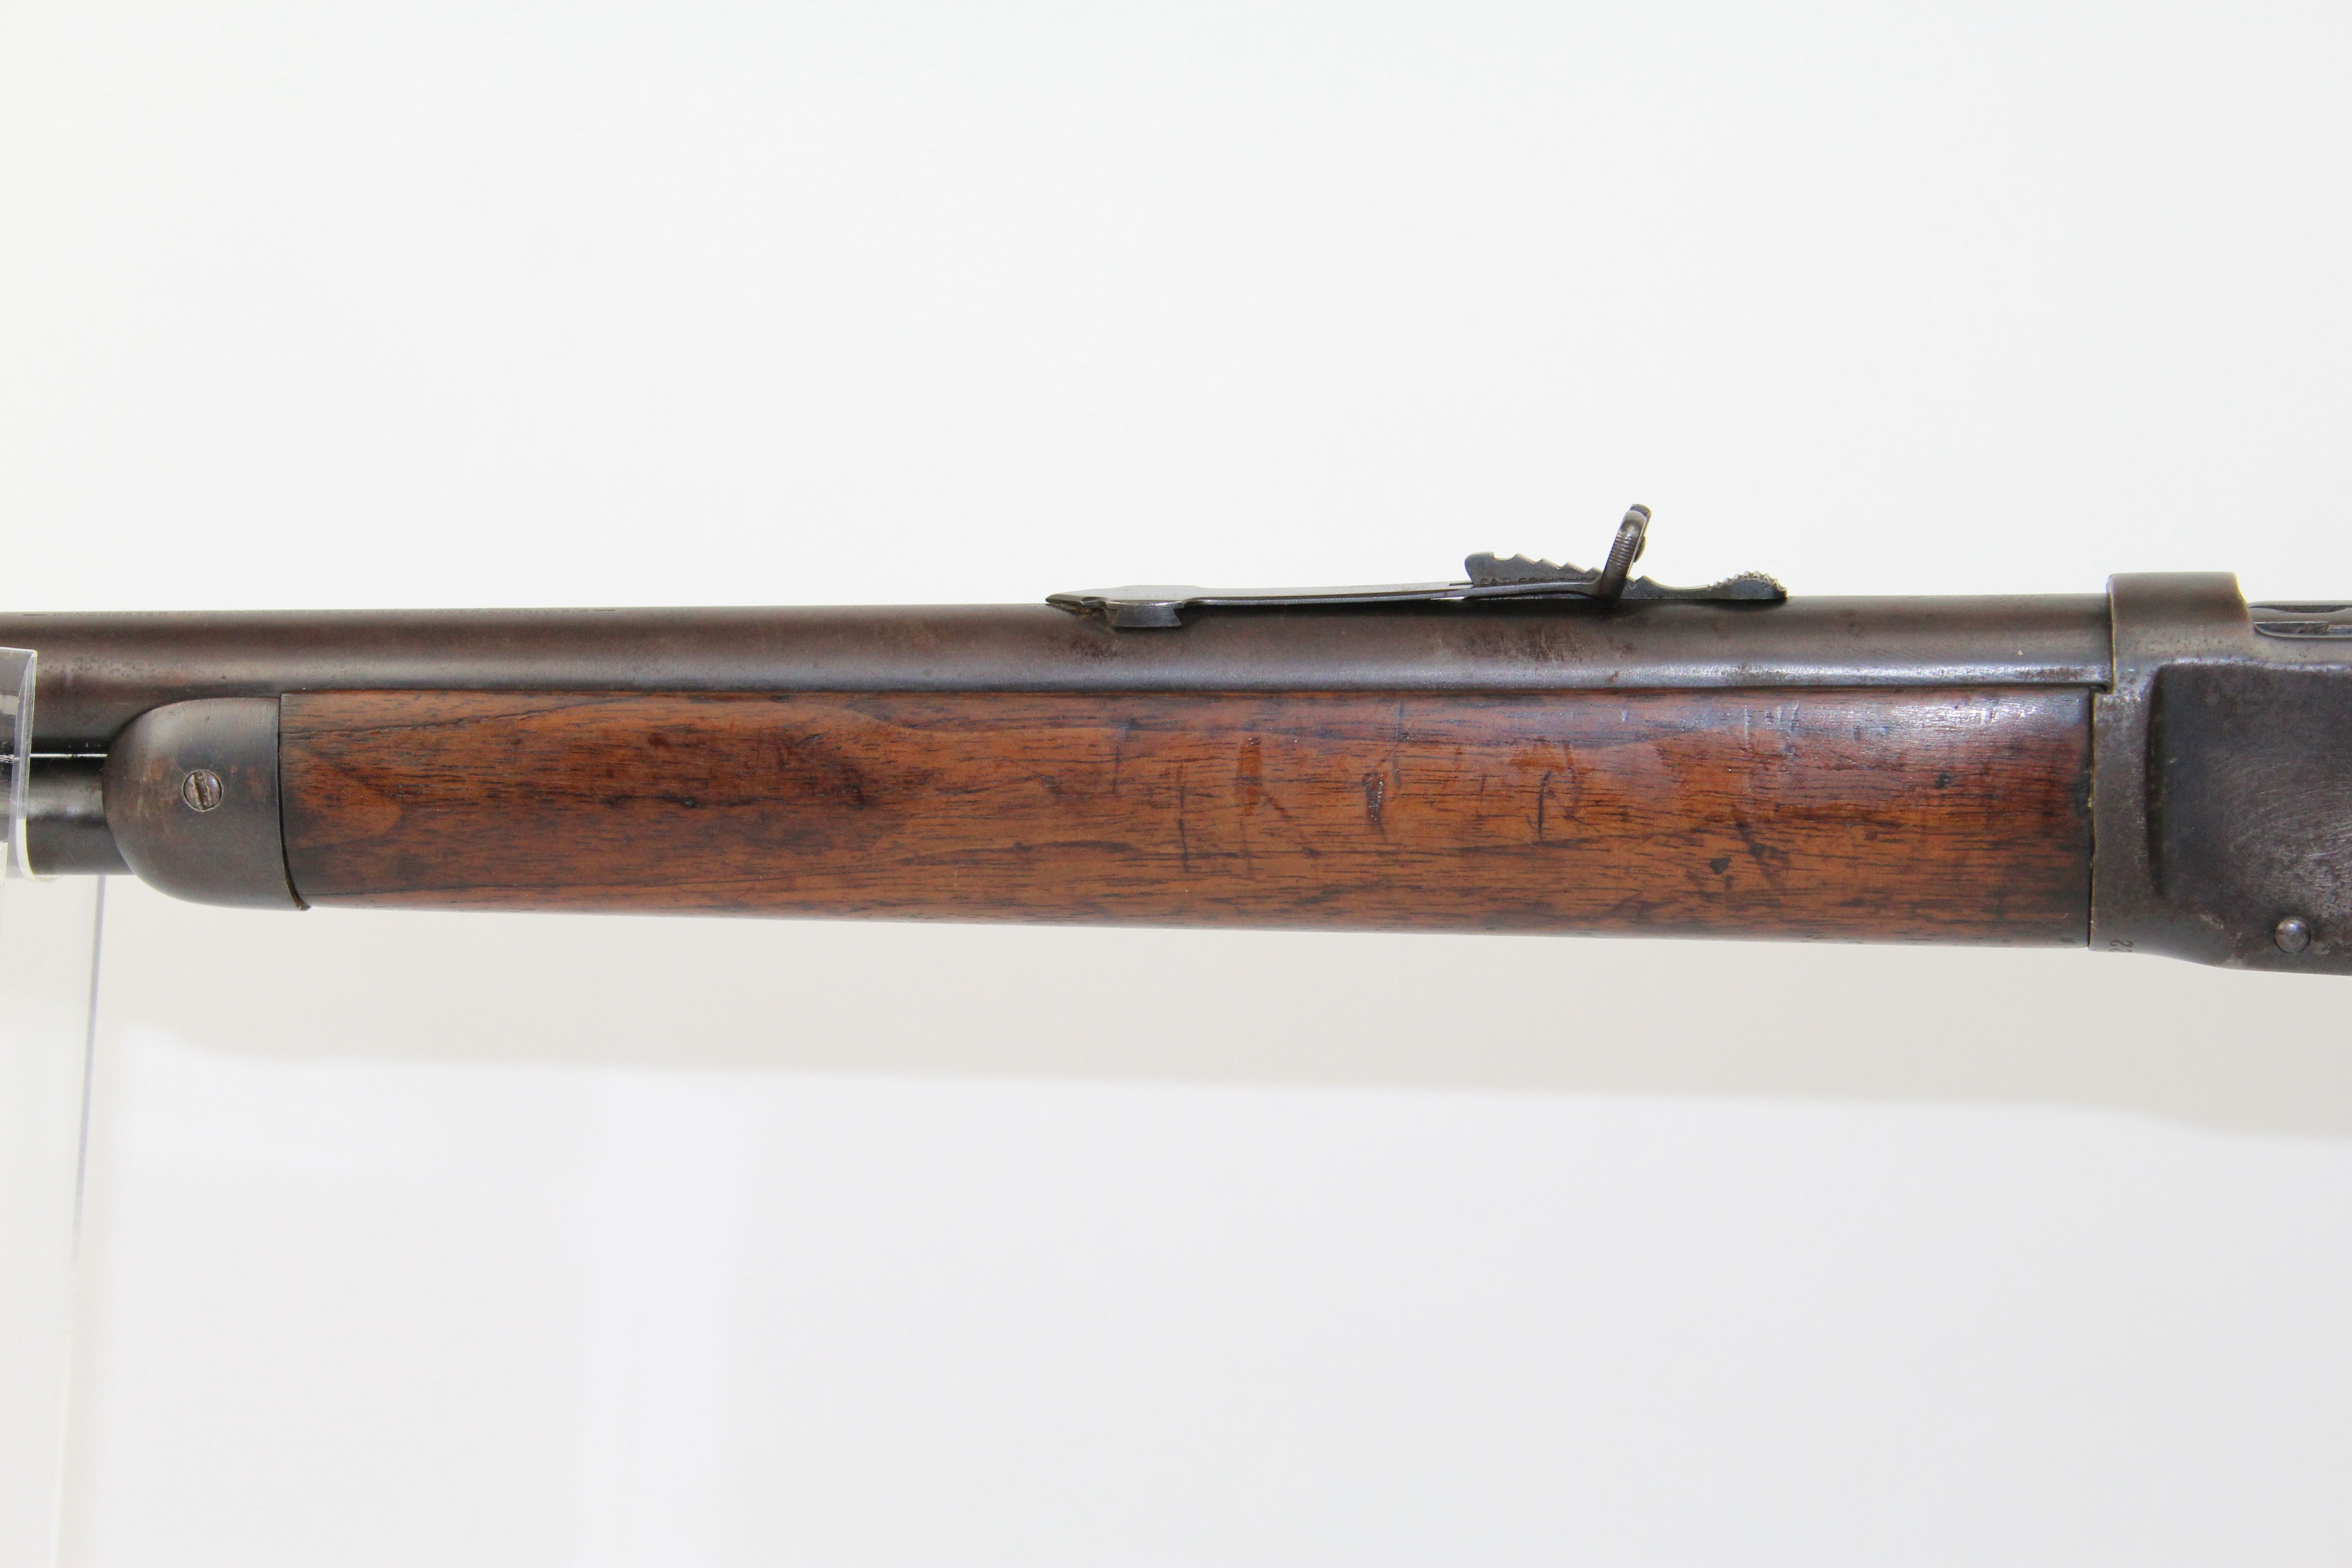 Winchester Lever Action Model Rifle Carbine C R Antique